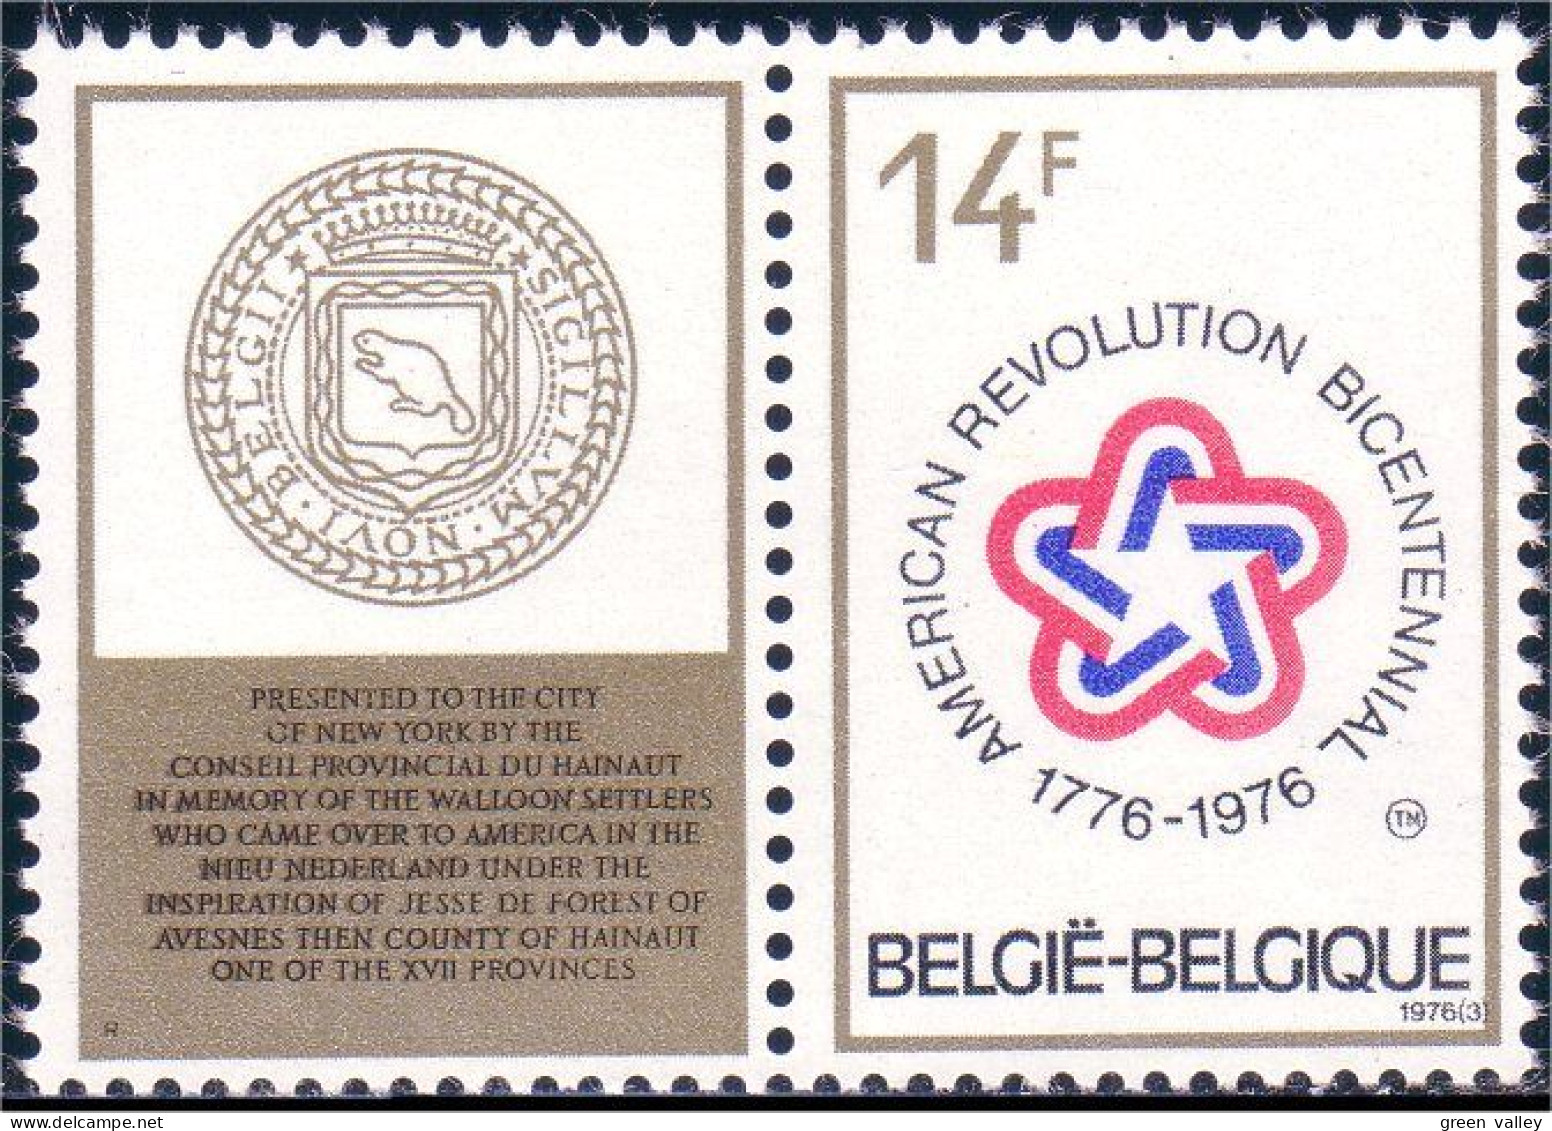 198 Belgium Wallons Walloon Immigrants American Bicentennial MNH ** Neuf SC (BEL-362b) - Unabhängigkeit USA